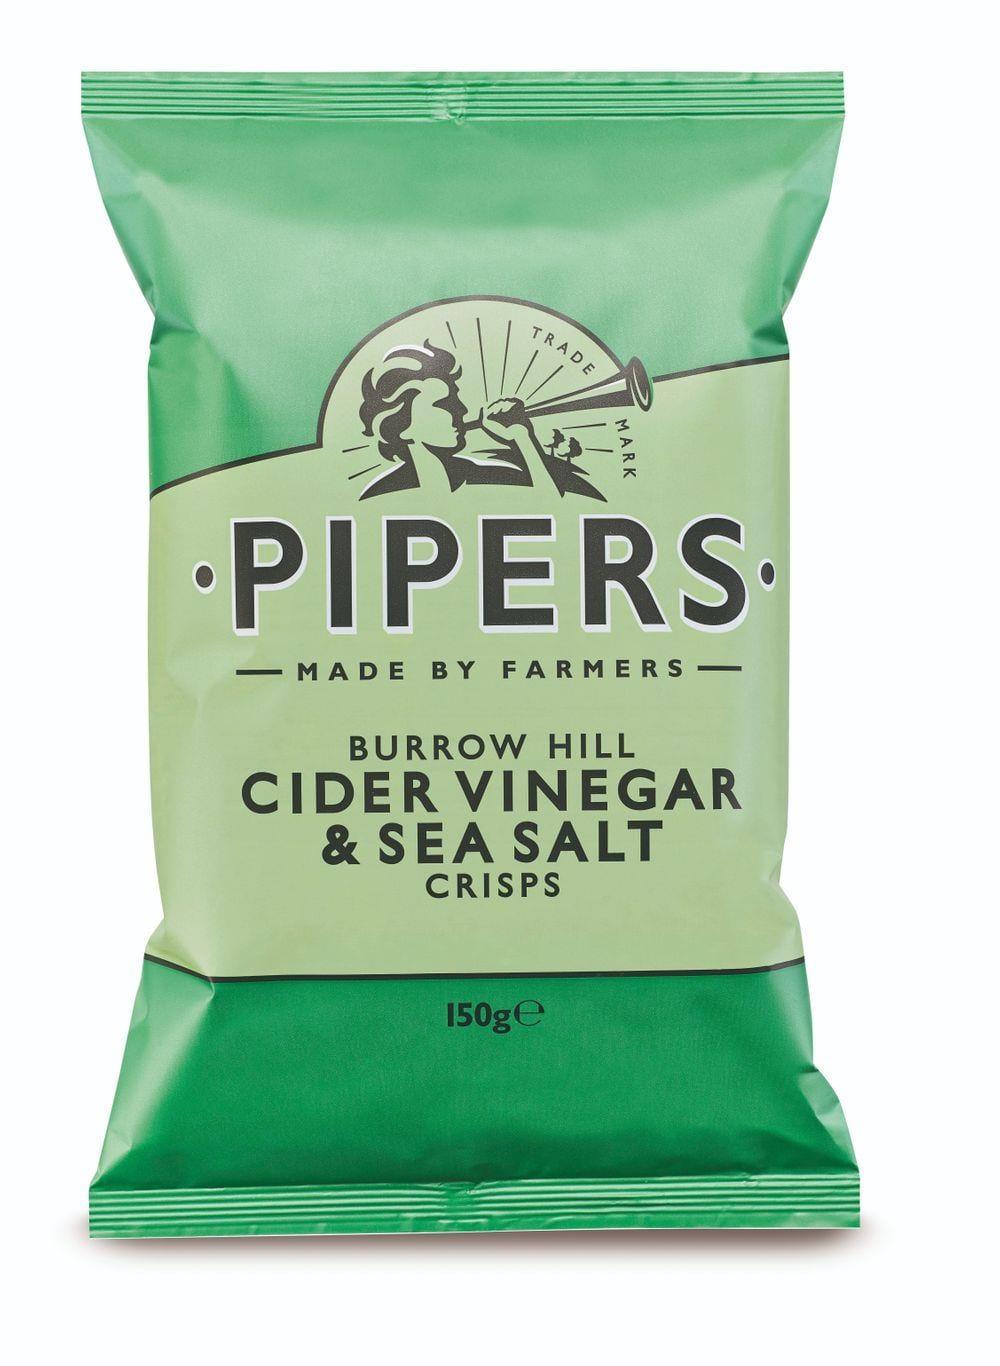 Pipers Burrow Hill Cider Vinegar Crisps 150g - Kitchenalia Westboro